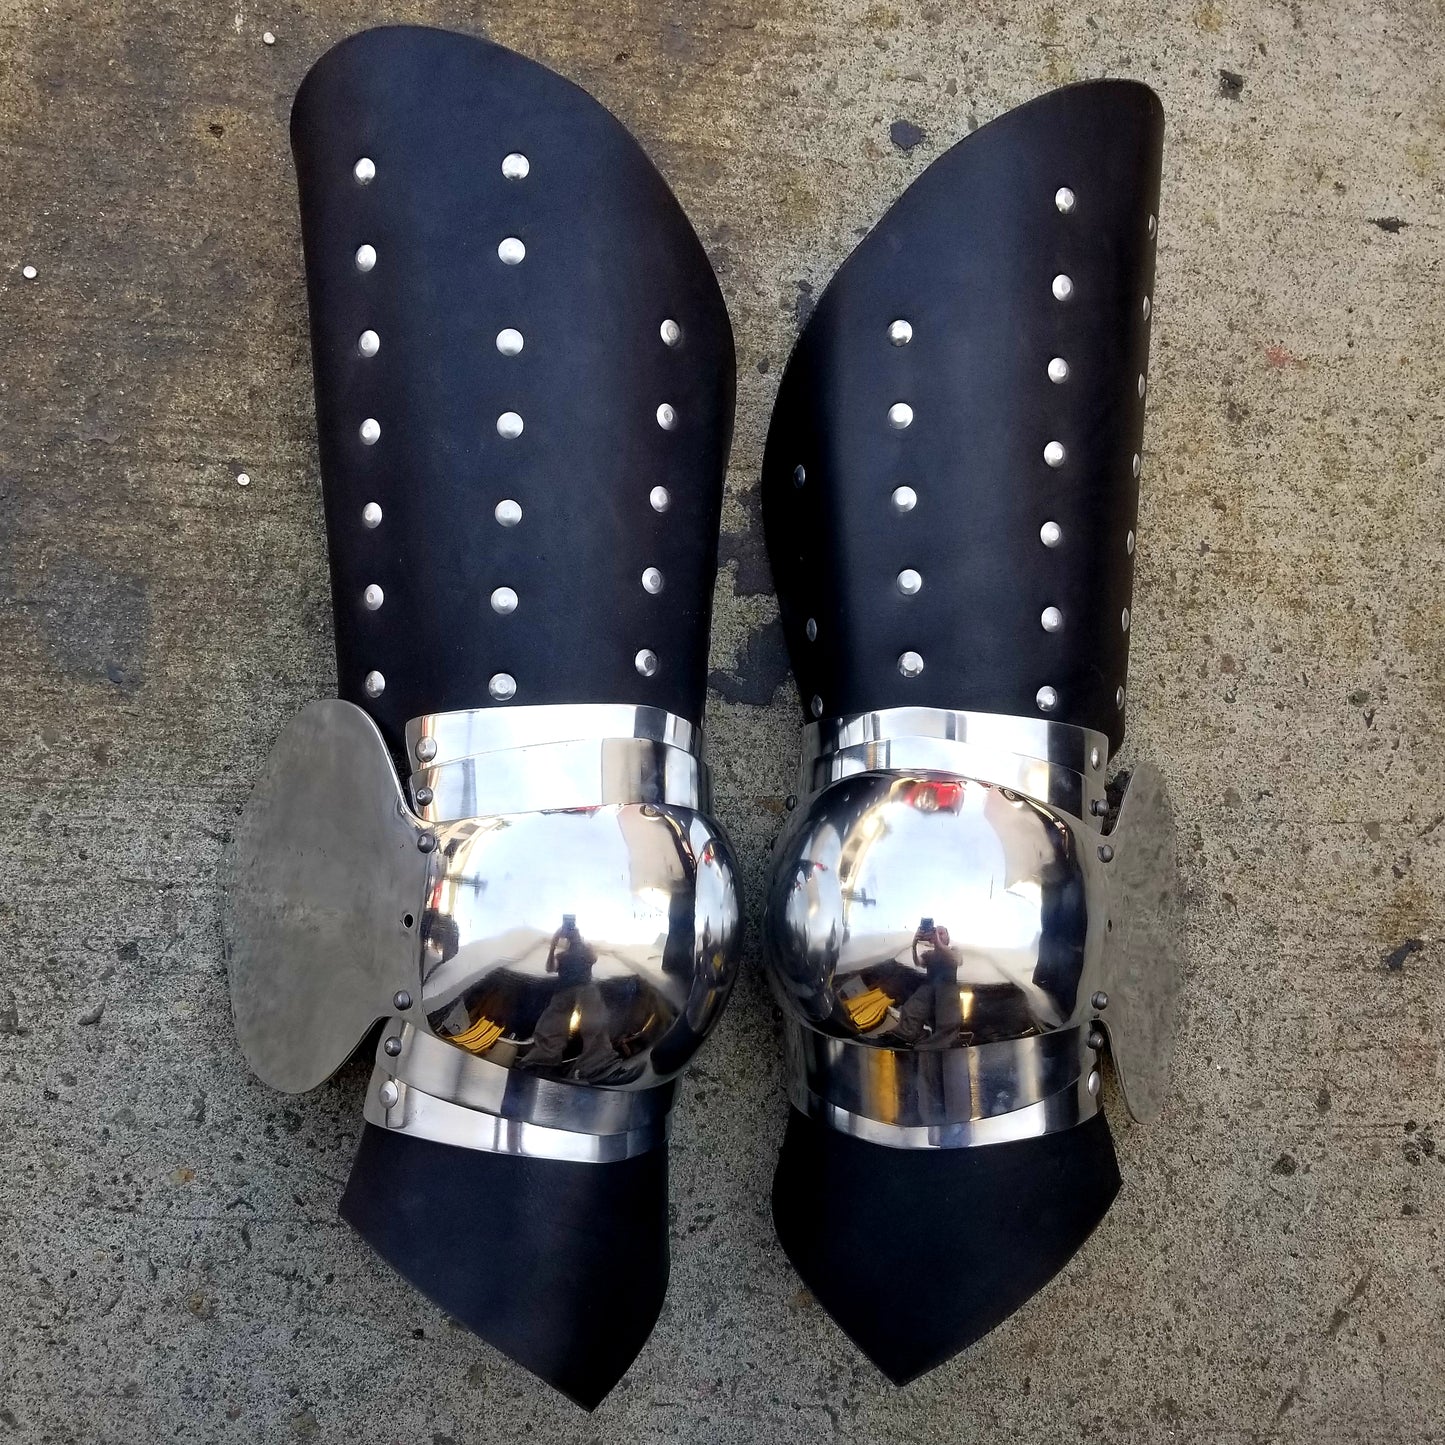 Aluminum Studded Legs .090 T6 Knees and internal Splints